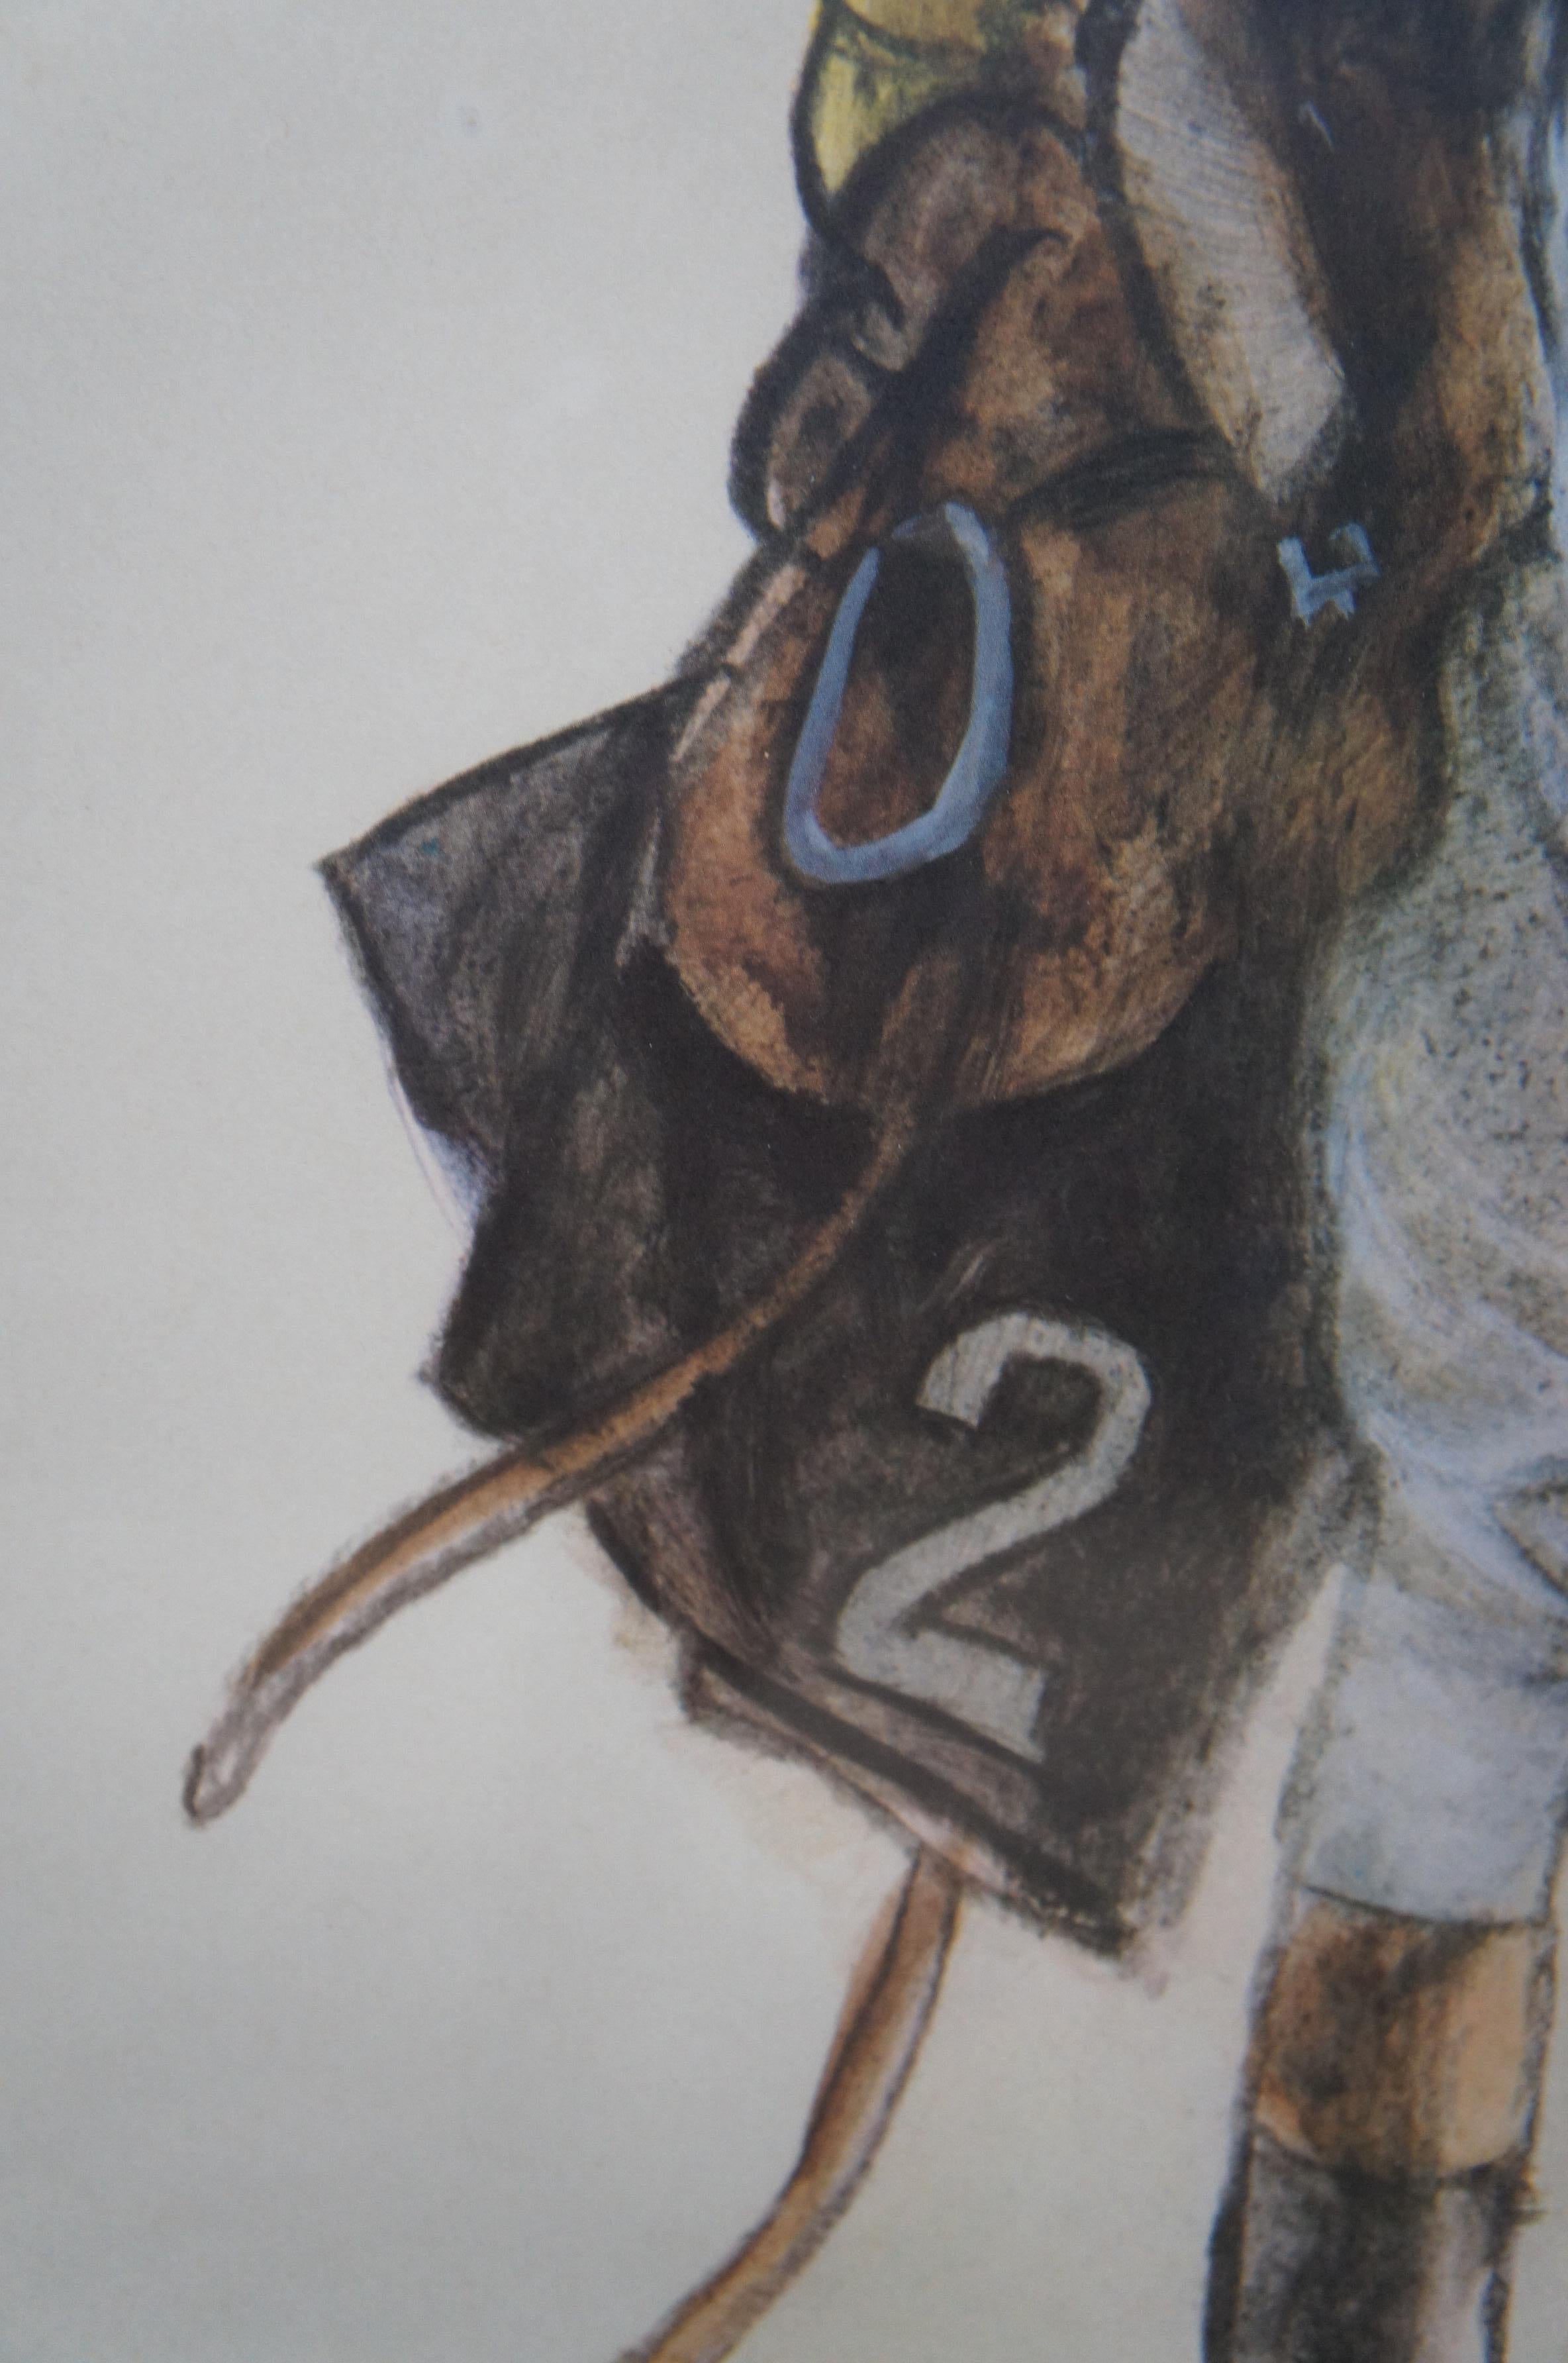 Paper 2 Vintage Henry Koehler Signed Offset Lithographs Equestrian Jockey Horse Racing For Sale